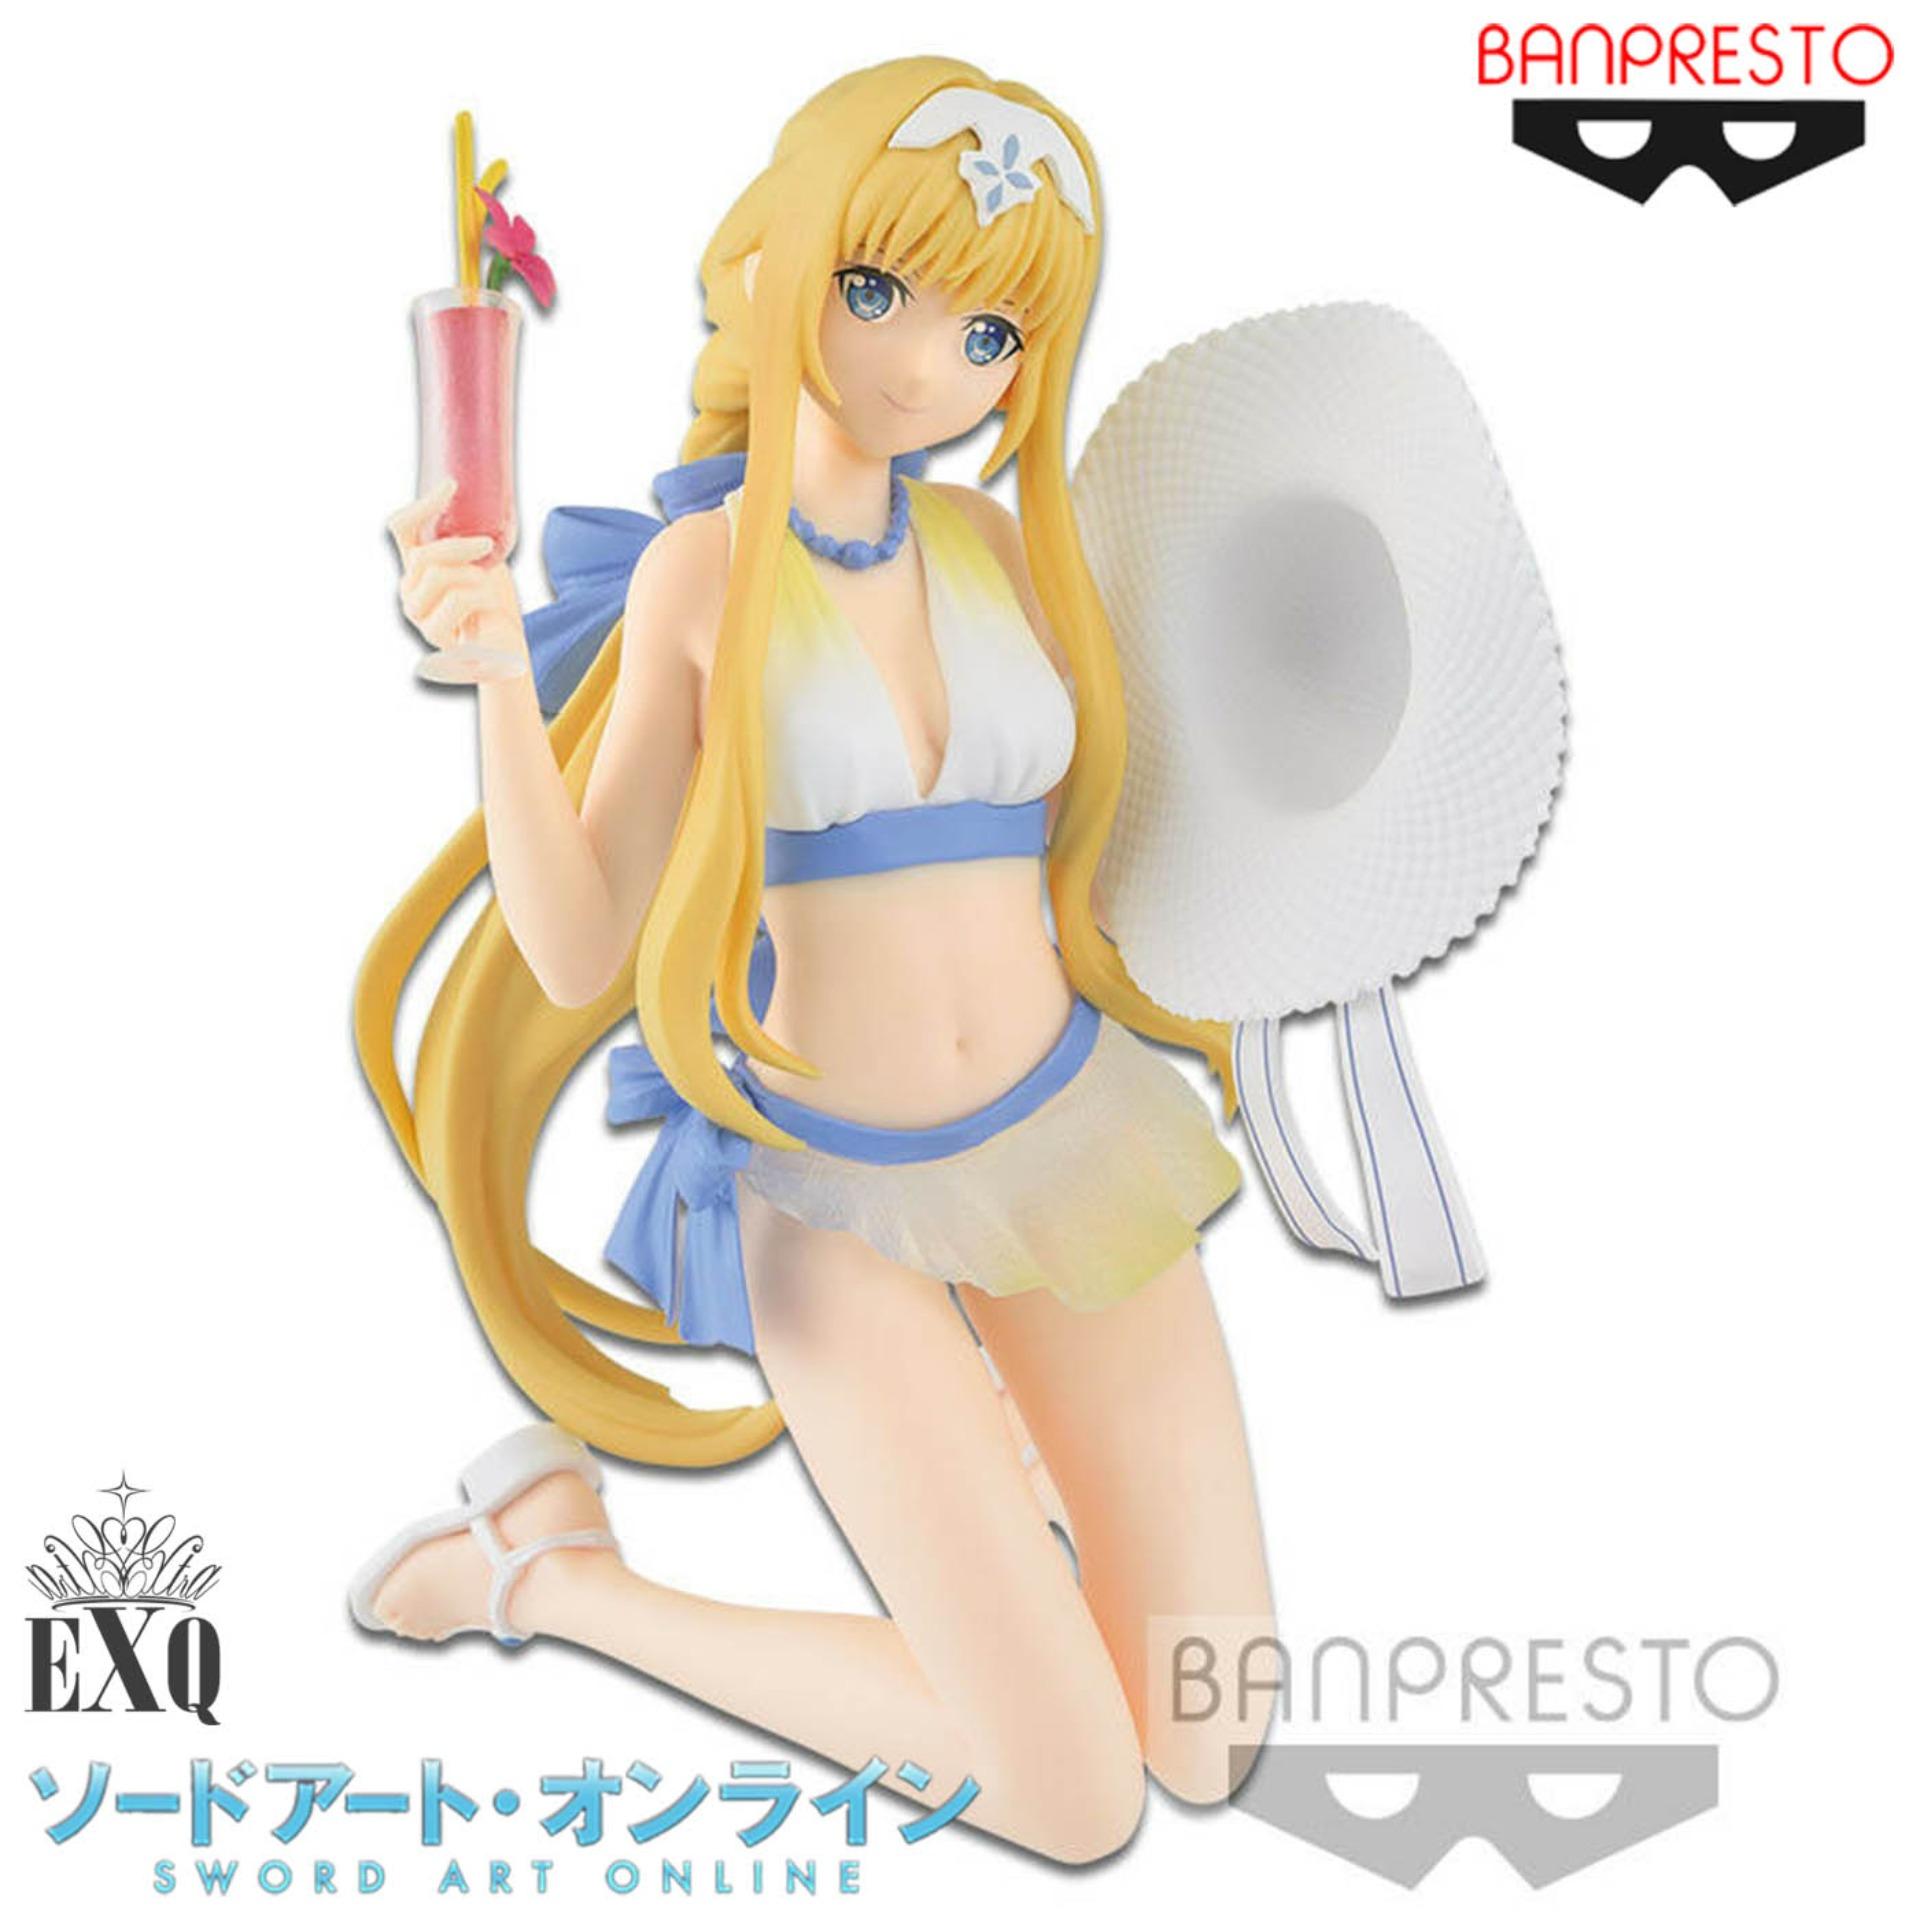 Model โมเดล งานแท้ 100�npresto Exq Code Register บันเพรสโต Sword Art Online ซอร์ดอาร์ตออนไลน์ Alice อลิซ Synthesis Thirty Ver Figure ฟิกเกอร์ Anime ของขวัญ Gift ของสะสมหายาก อนิเมะ การ์ตูน มังงะ Doll ตุ๊กตา คอลเลกชัน สั่งและนำเข้าจากญี่ปุ่น manga